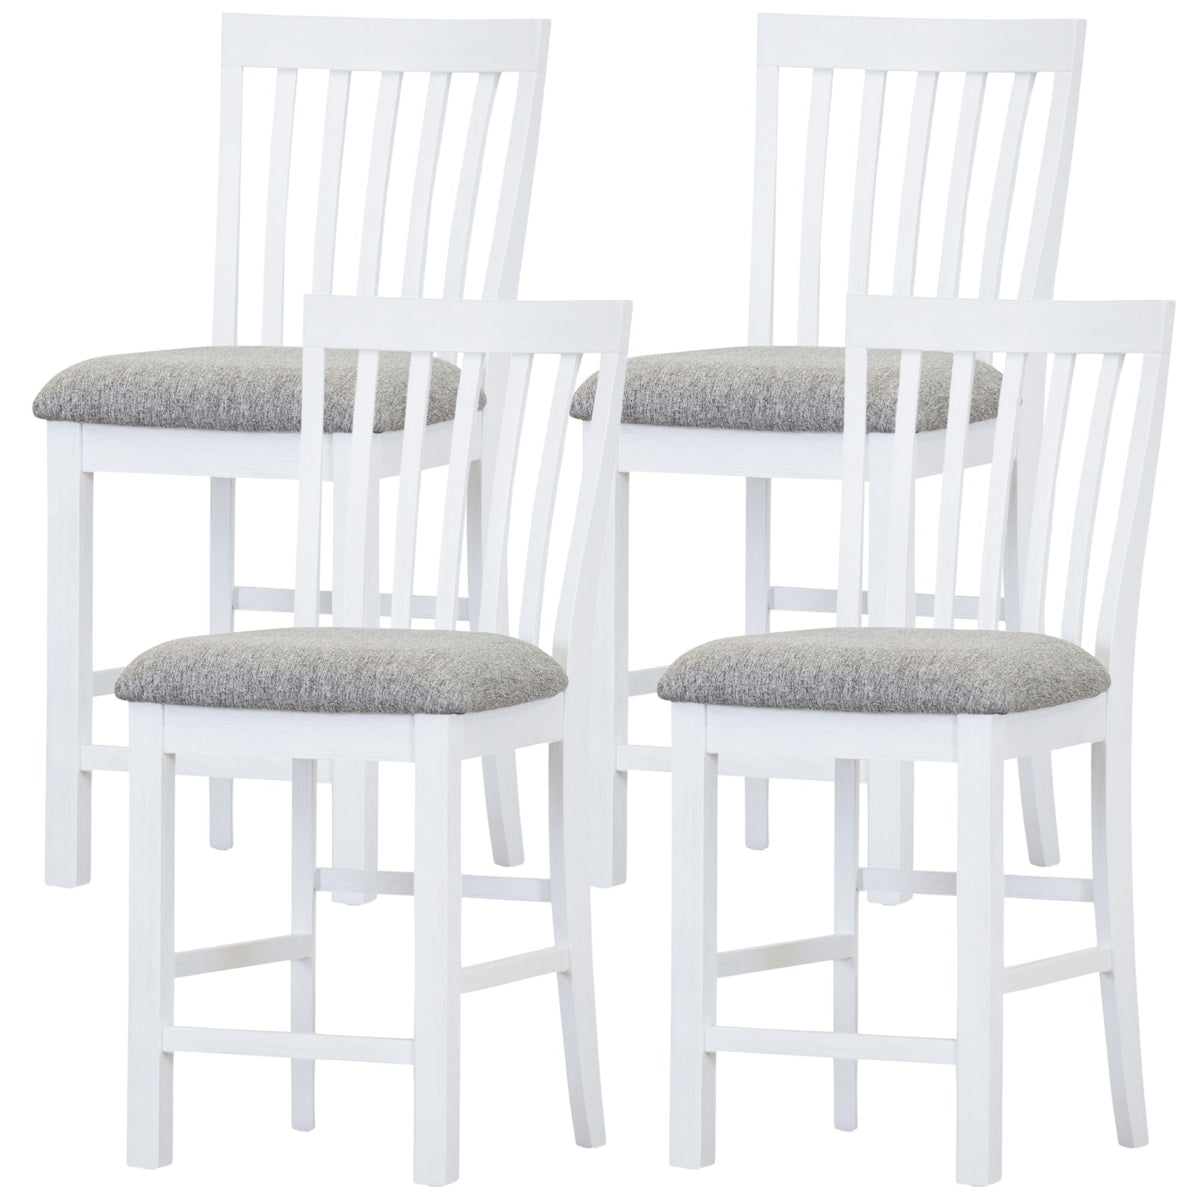 Laelia Wood Chair in Solid Acacia Coastal White - Set of 4